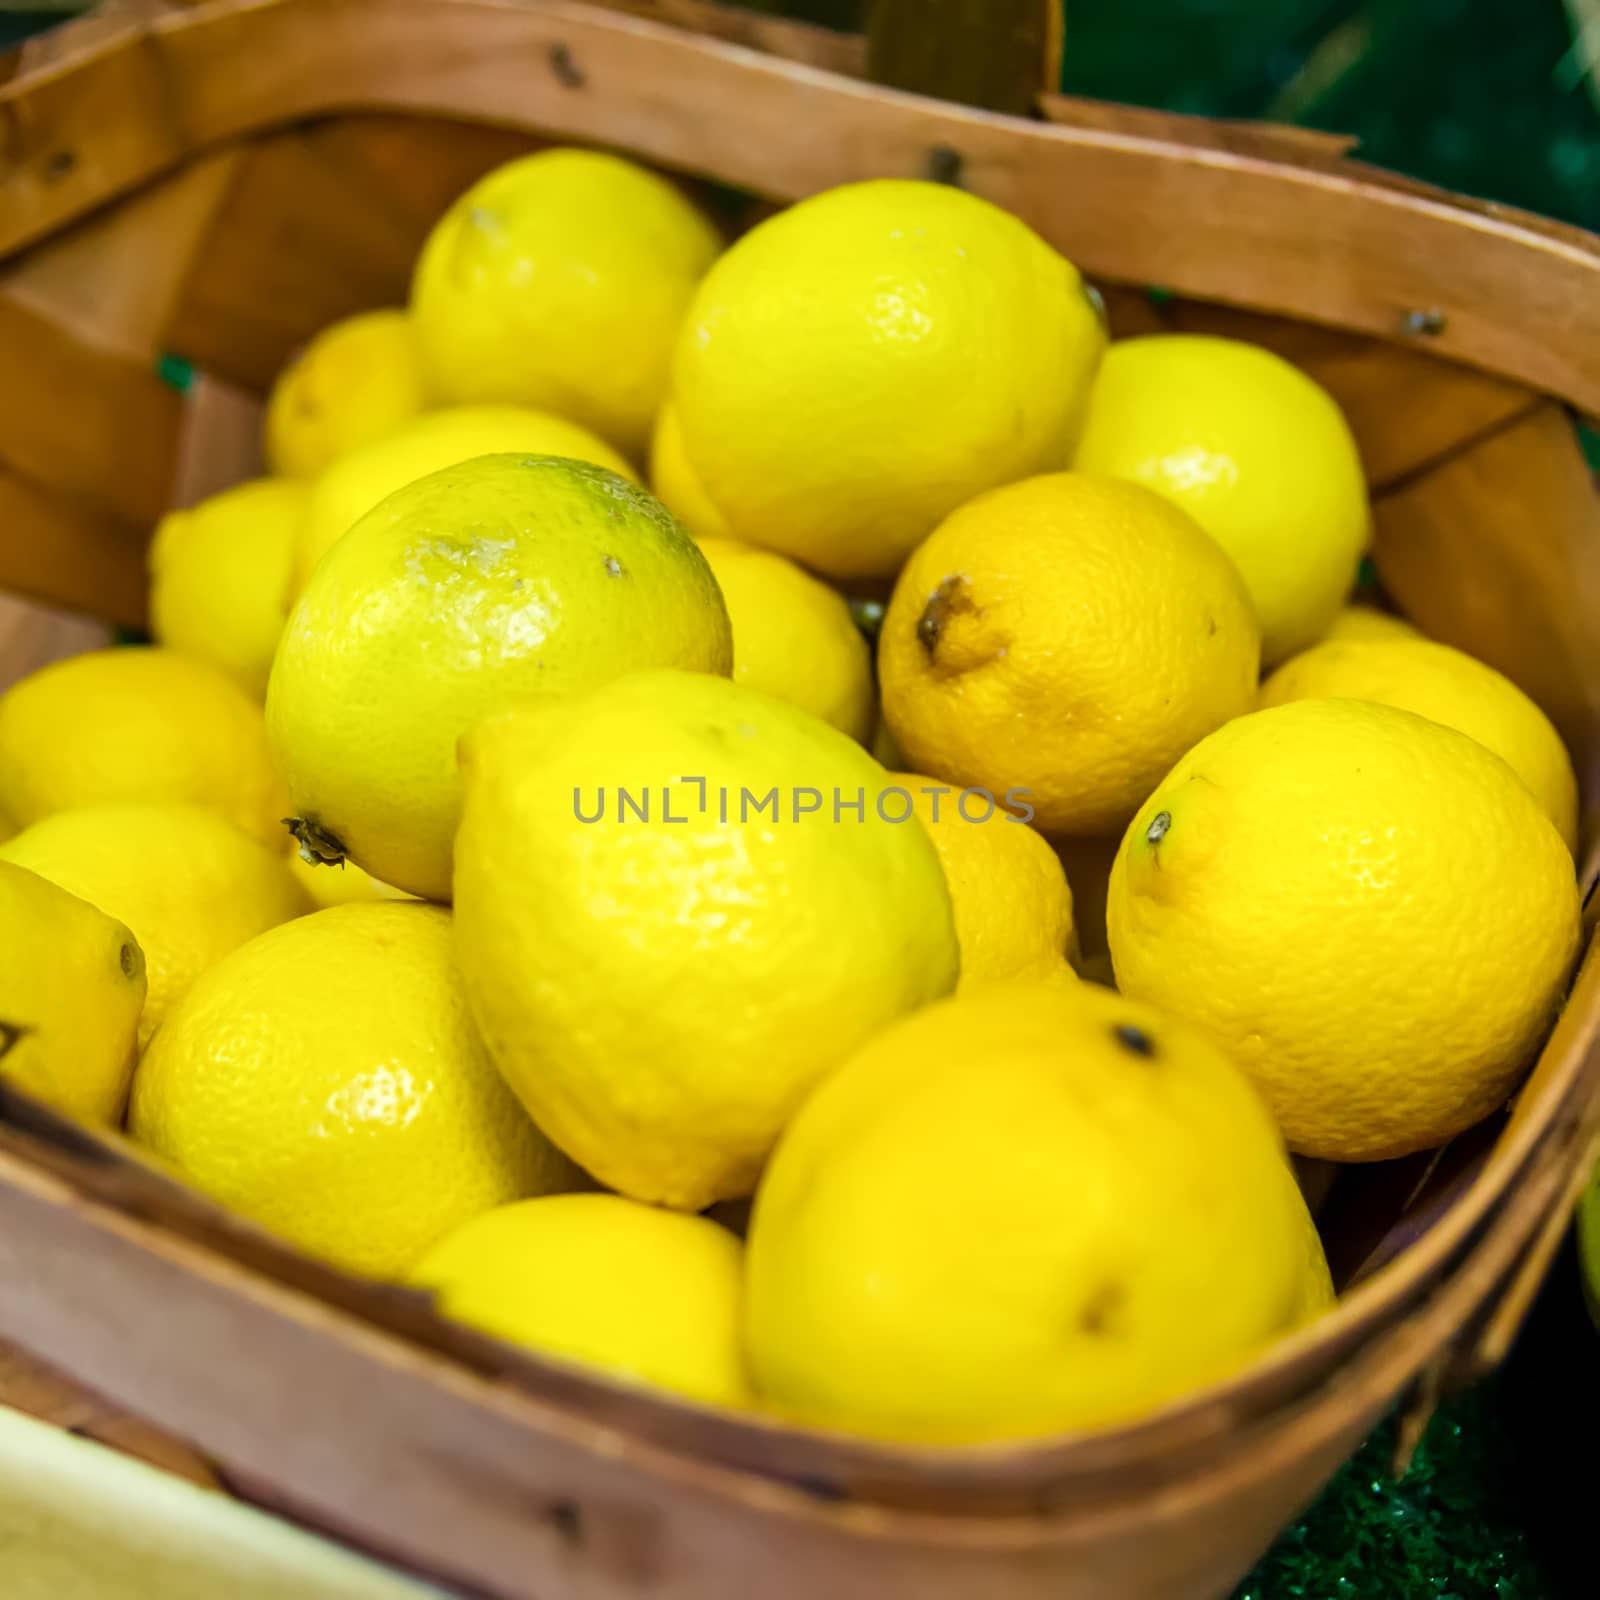 Colorful Display Of Lemons In Market in a basket